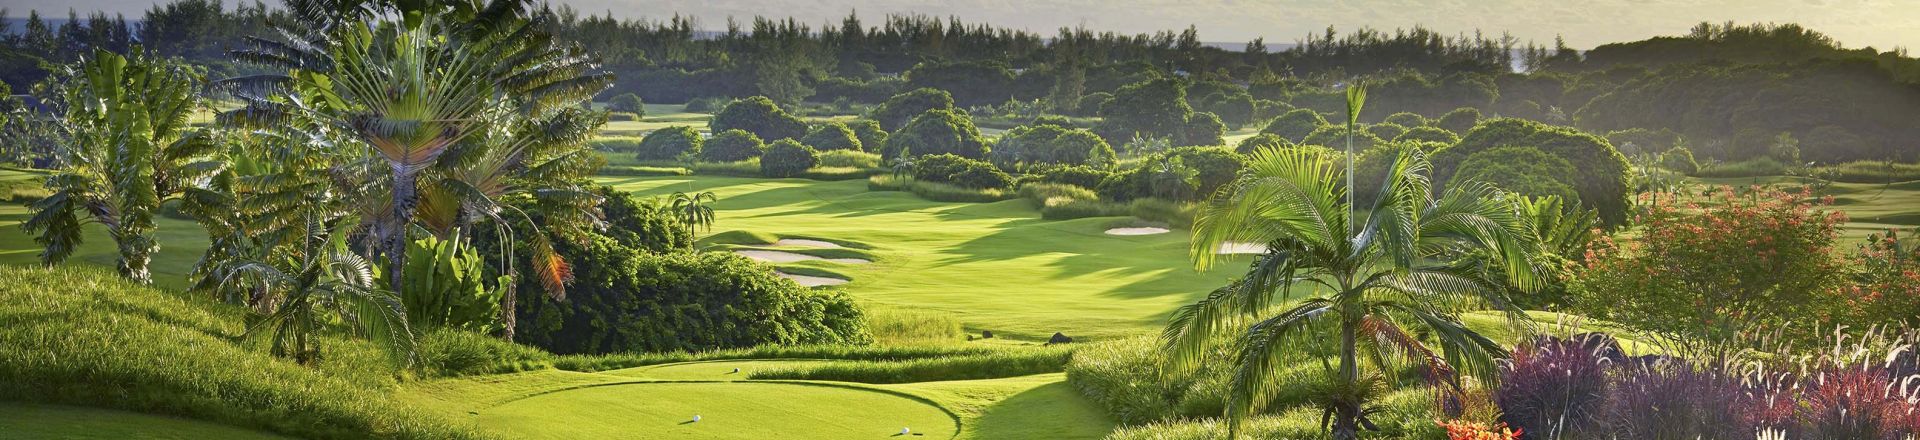 Heritage Golf Club, Mauritius